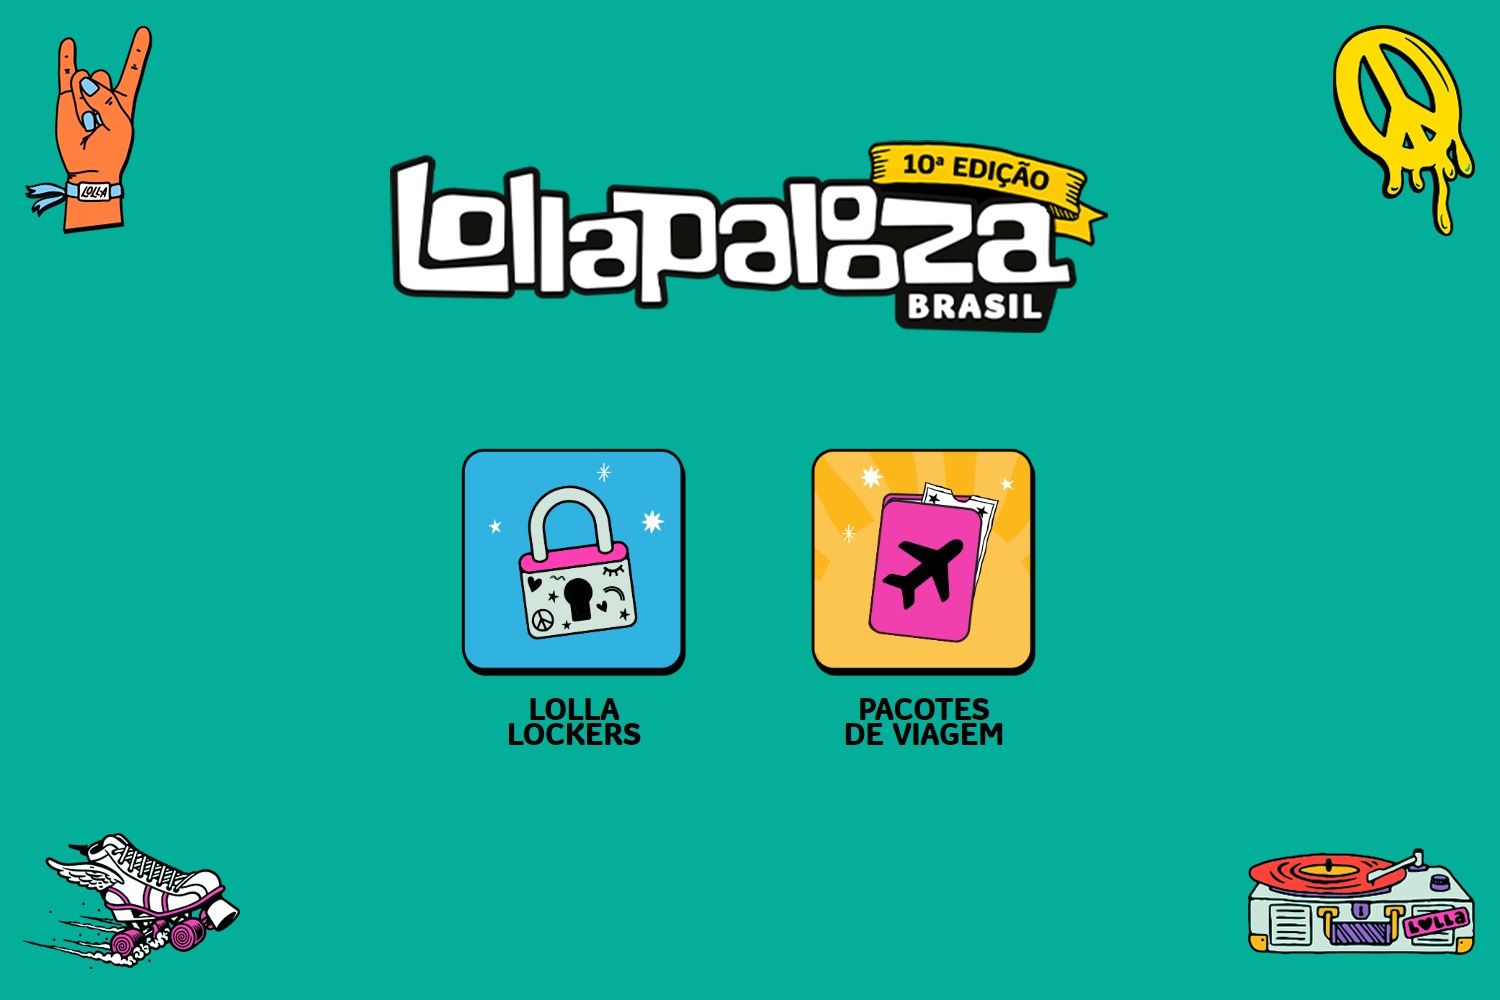 Lollapalooza Brasil 2023 anuncia lockers e pacotes de viagem